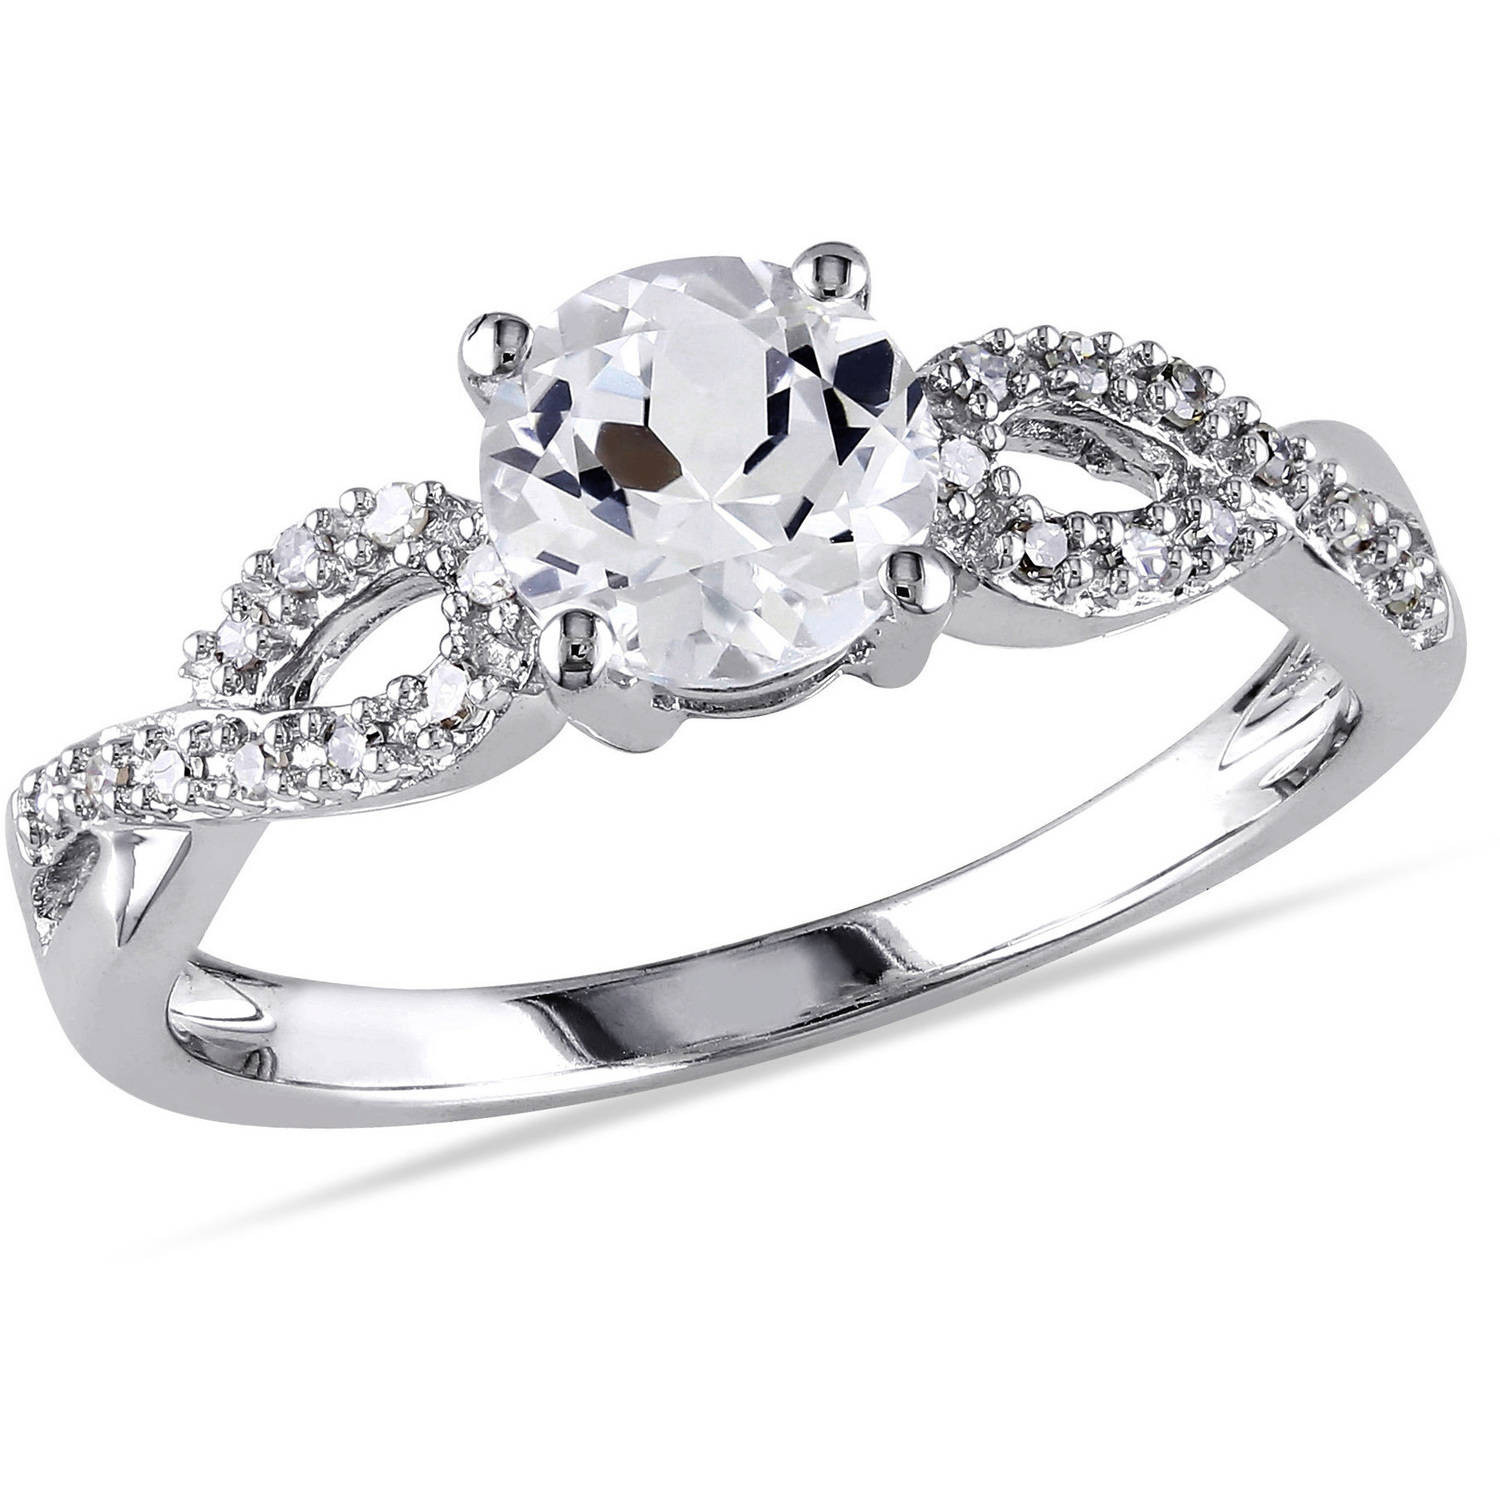 Walmart Diamond Wedding Rings
 Miabella 1 10 Carat T W Diamond and 1 Carat T G W